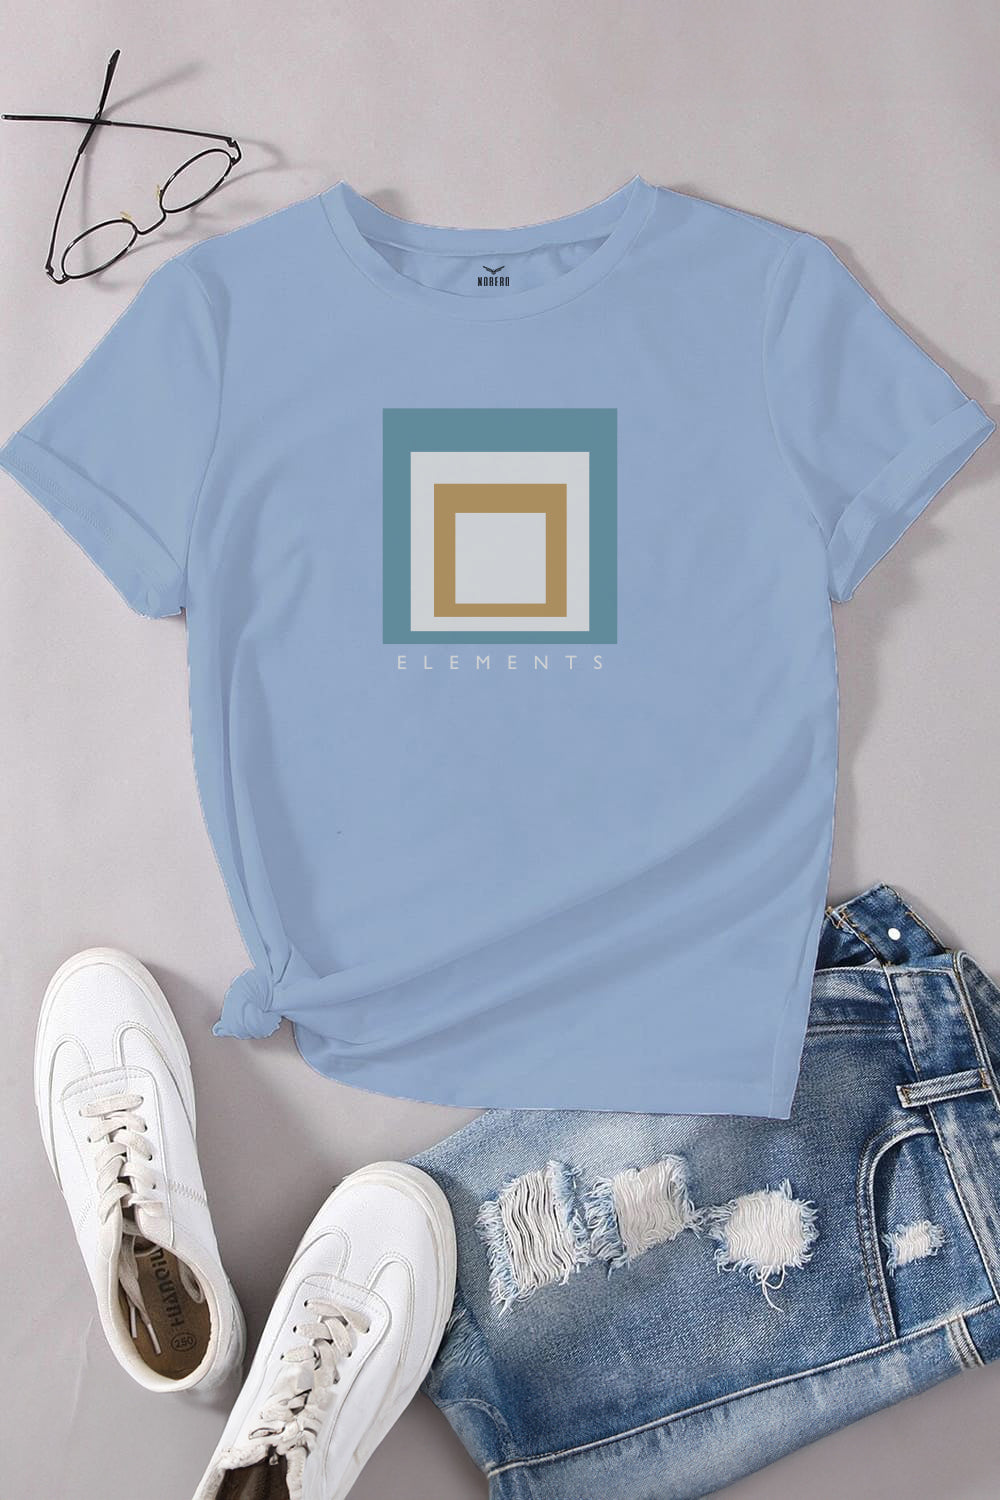 Boyfriend Elements Classic Fit T-Shirt